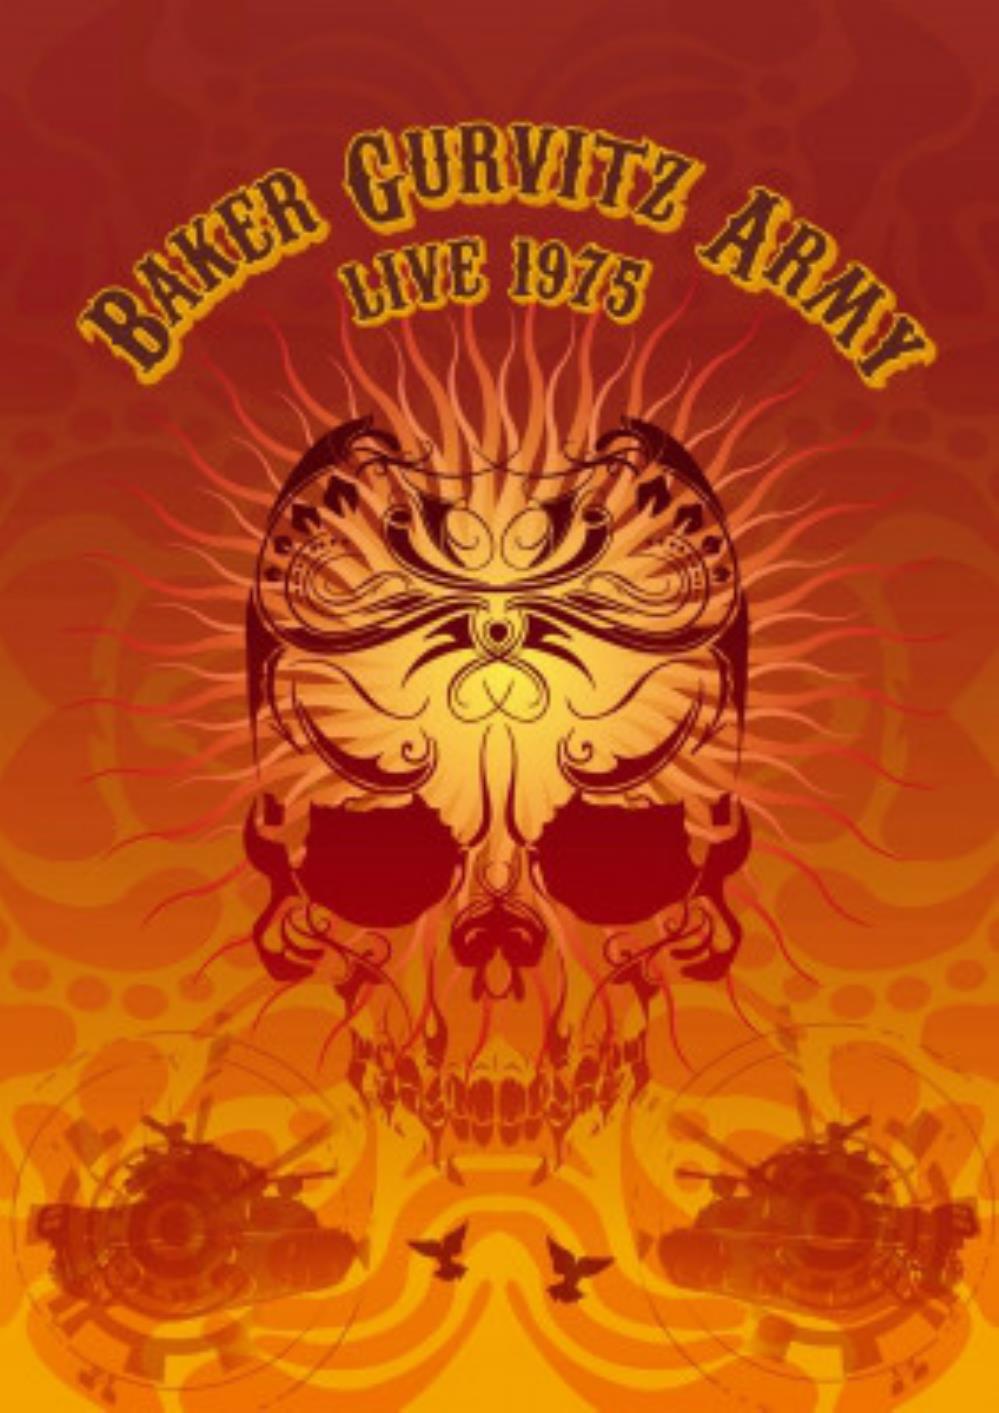 Baker Gurvitz Army Live 1975 album cover